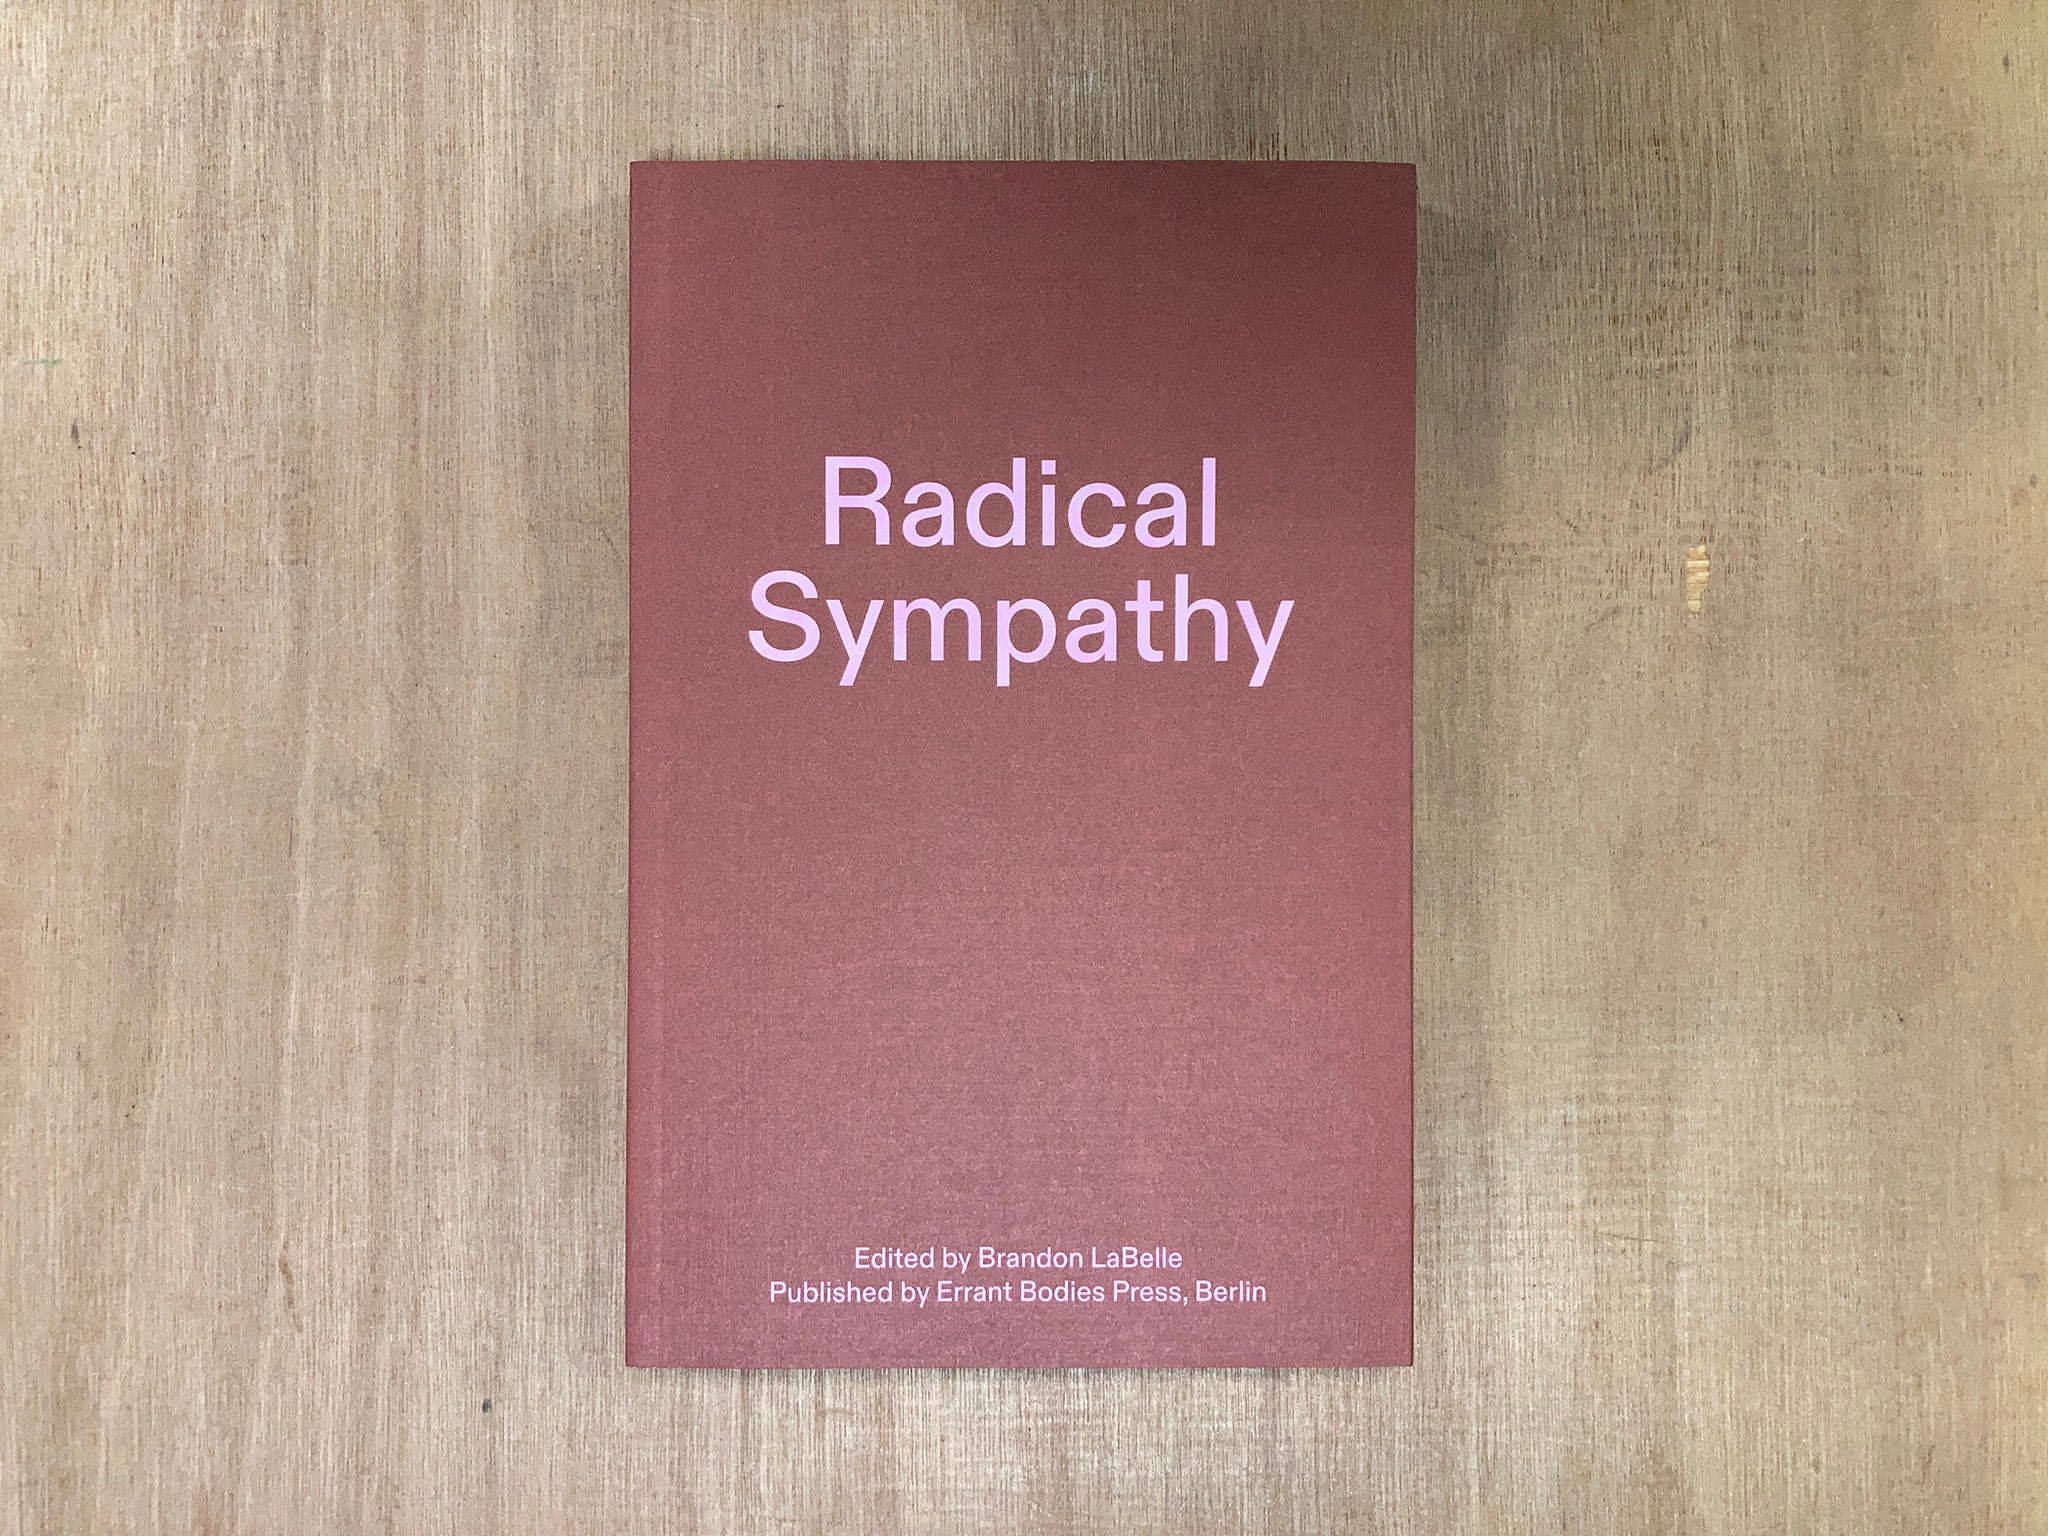 RADICAL SYMPATHY edited by Brandon LaBelle